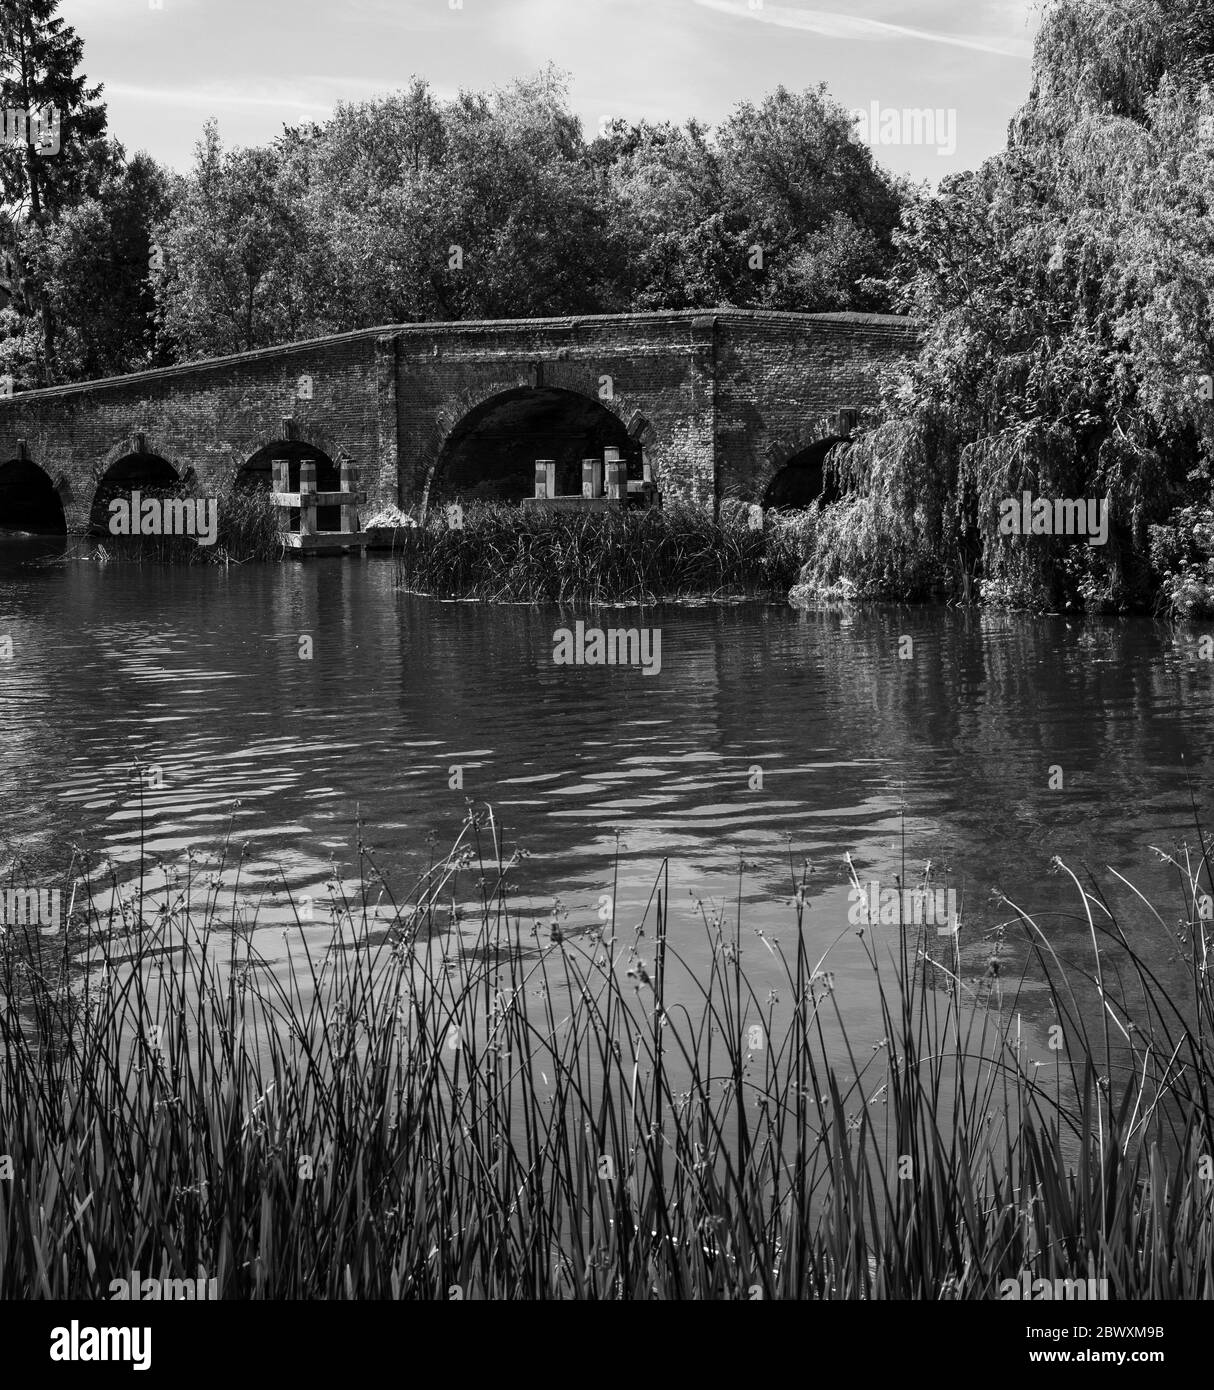 Paysage idyllique noir et blanc, Sonning Bridge, Sonning, Reading, Berkshire, Angleterre, Royaume-Uni, GB. Banque D'Images